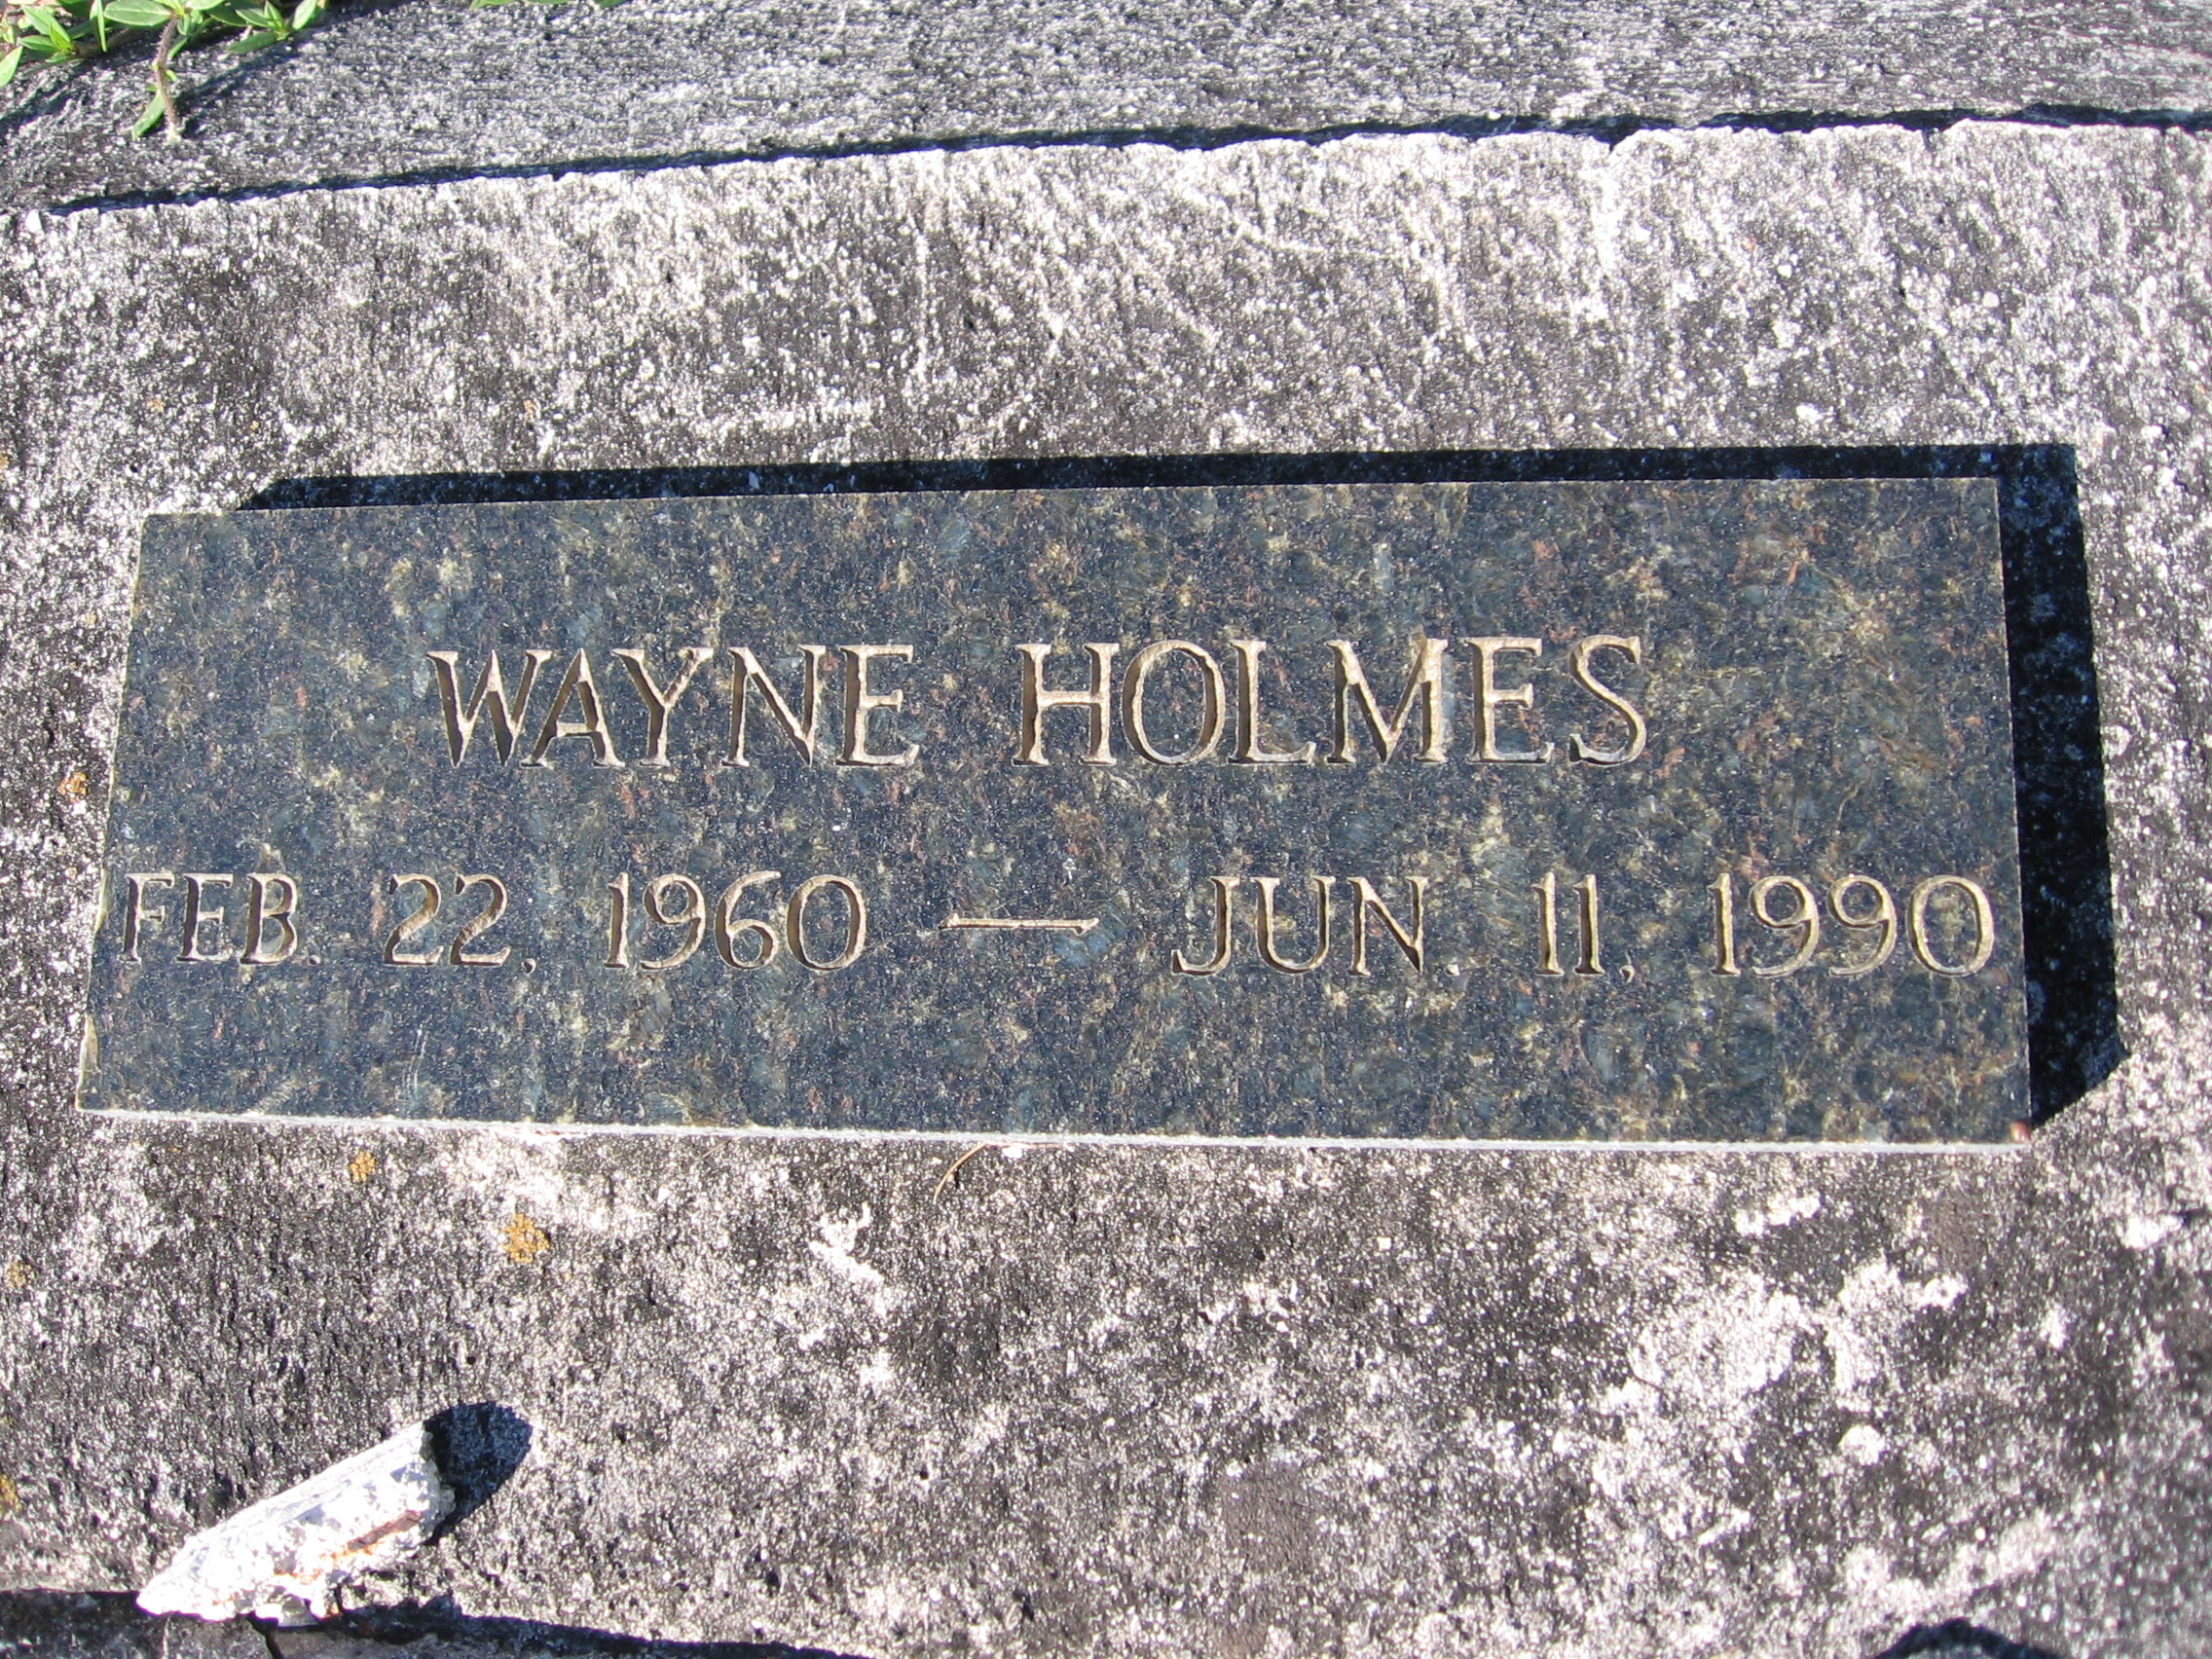 Wayne Holmes